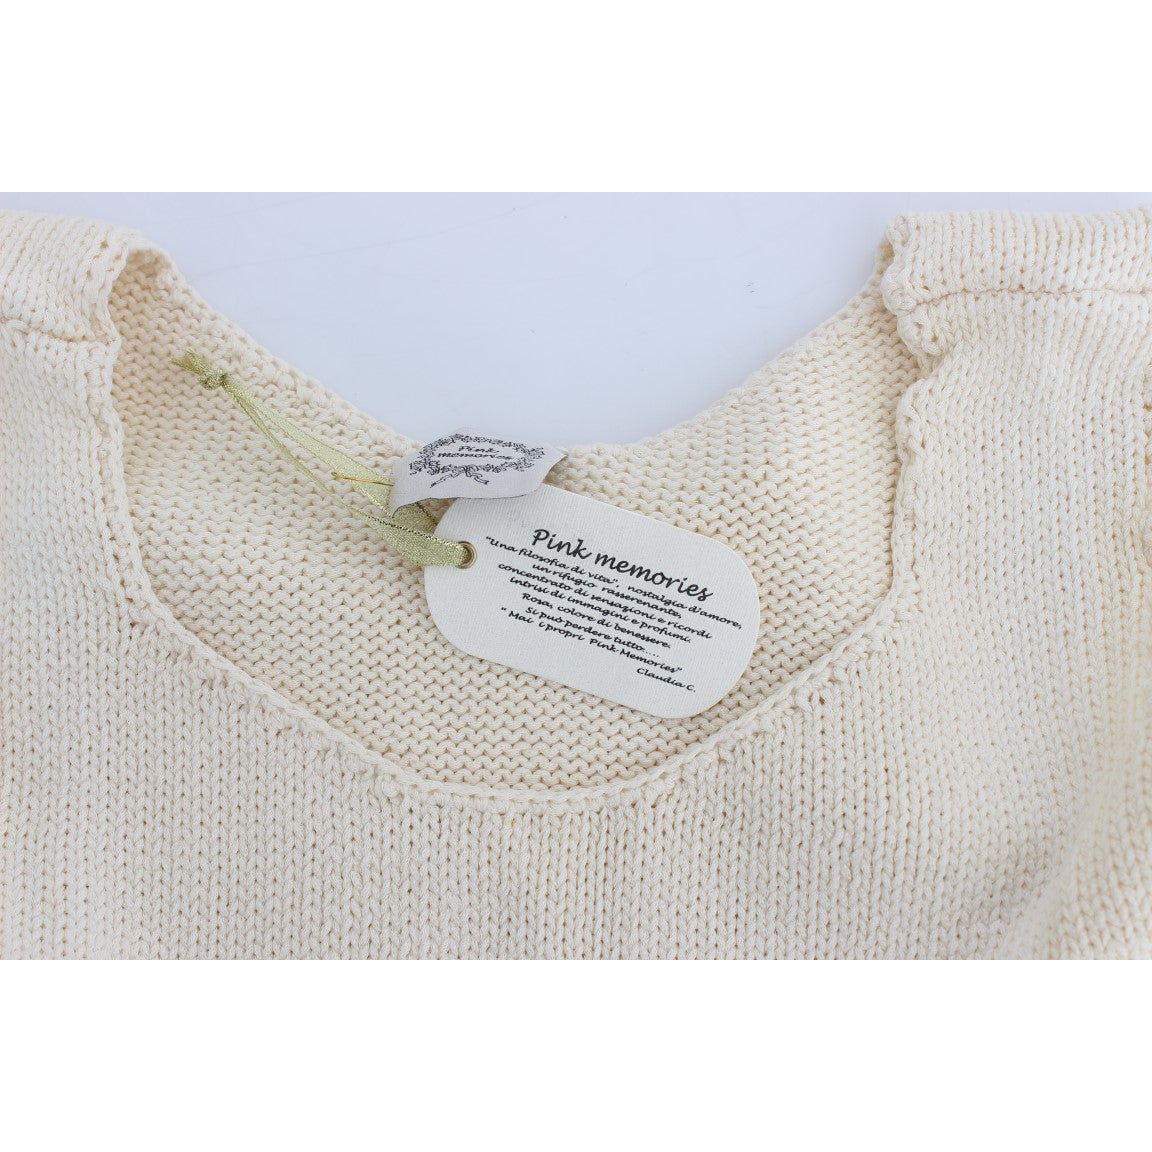 PINK MEMORIES Beige Sleeveless Knit Vest Sweater beige-cotton-blend-knitted-sleeveless-sweater-1 179285-beige-cotton-blend-knitted-sleeveless-sweater-2-5.jpg